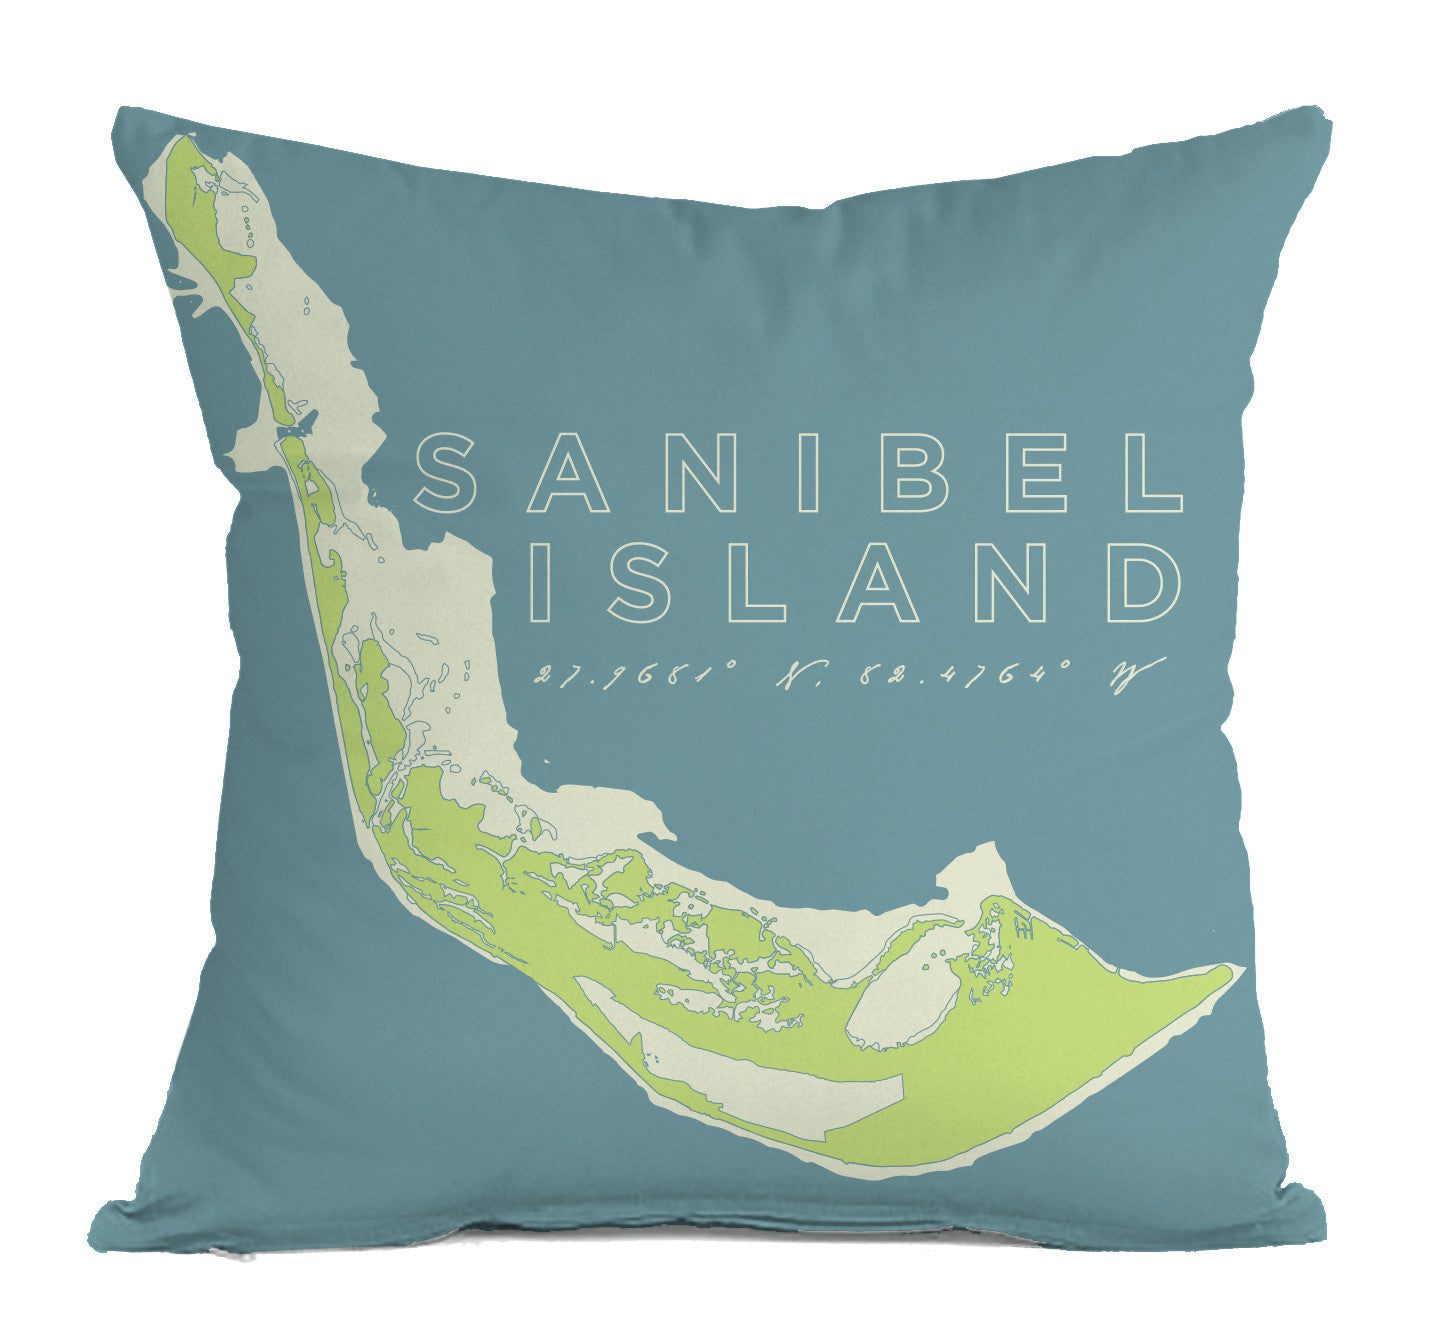 Sanibel Island Indoor/Outdoor Decorative Throw Pillow, Faded Aqua & Spring Green